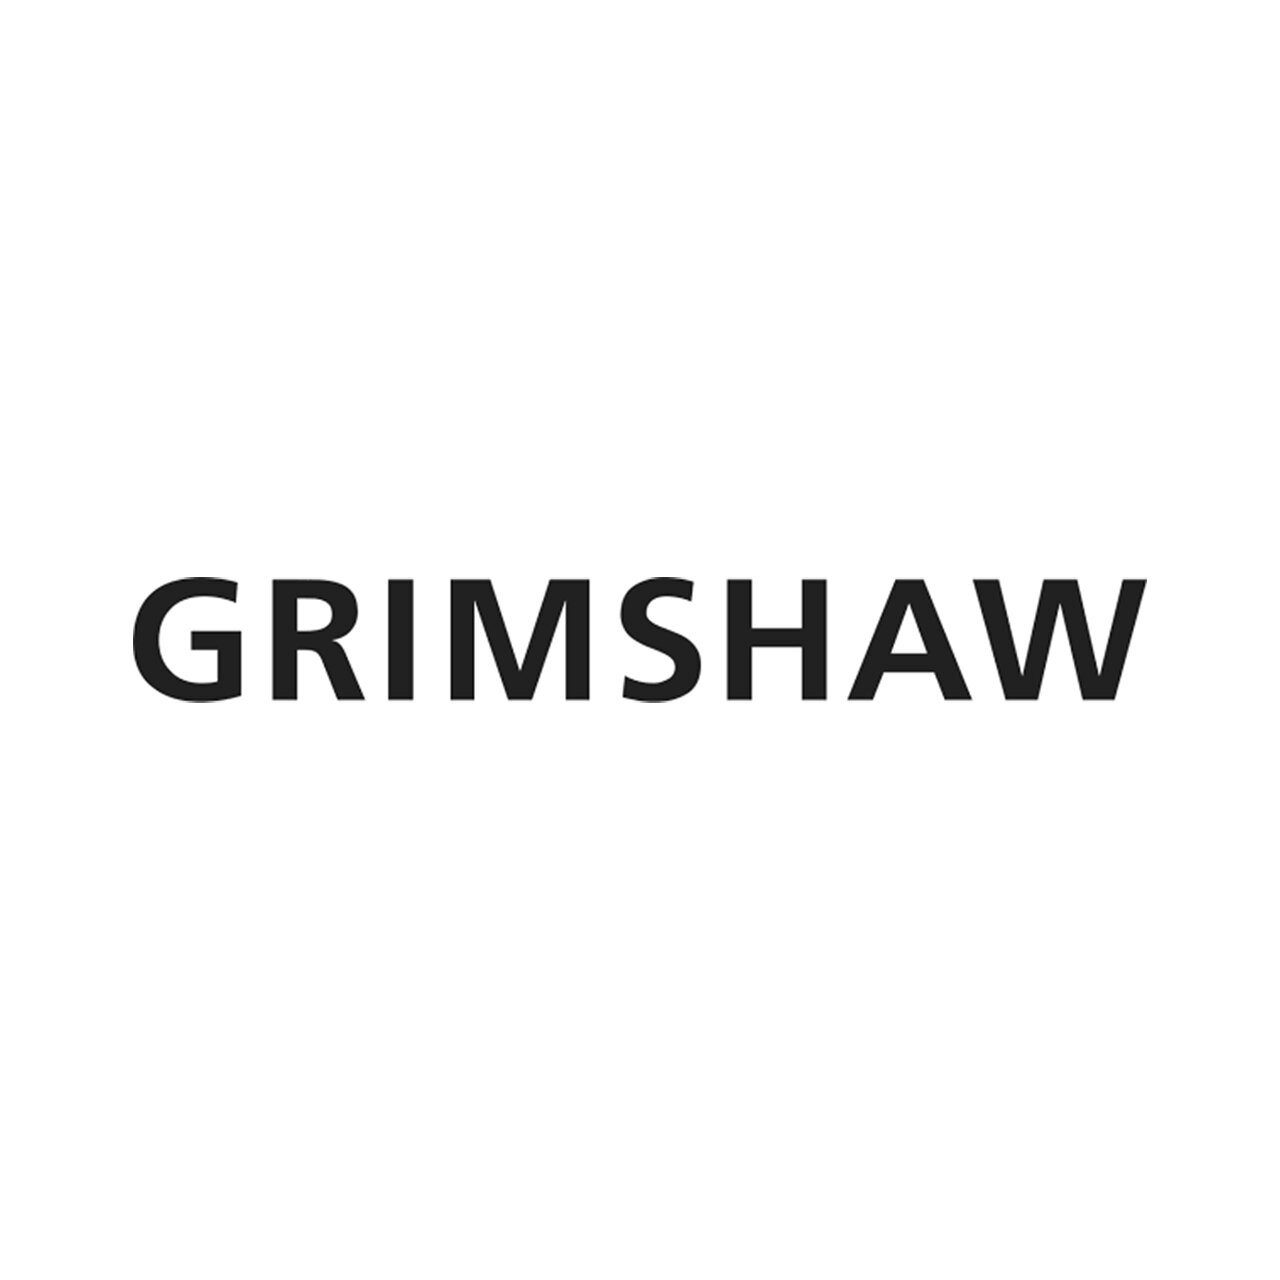 Grimshaw.jpg